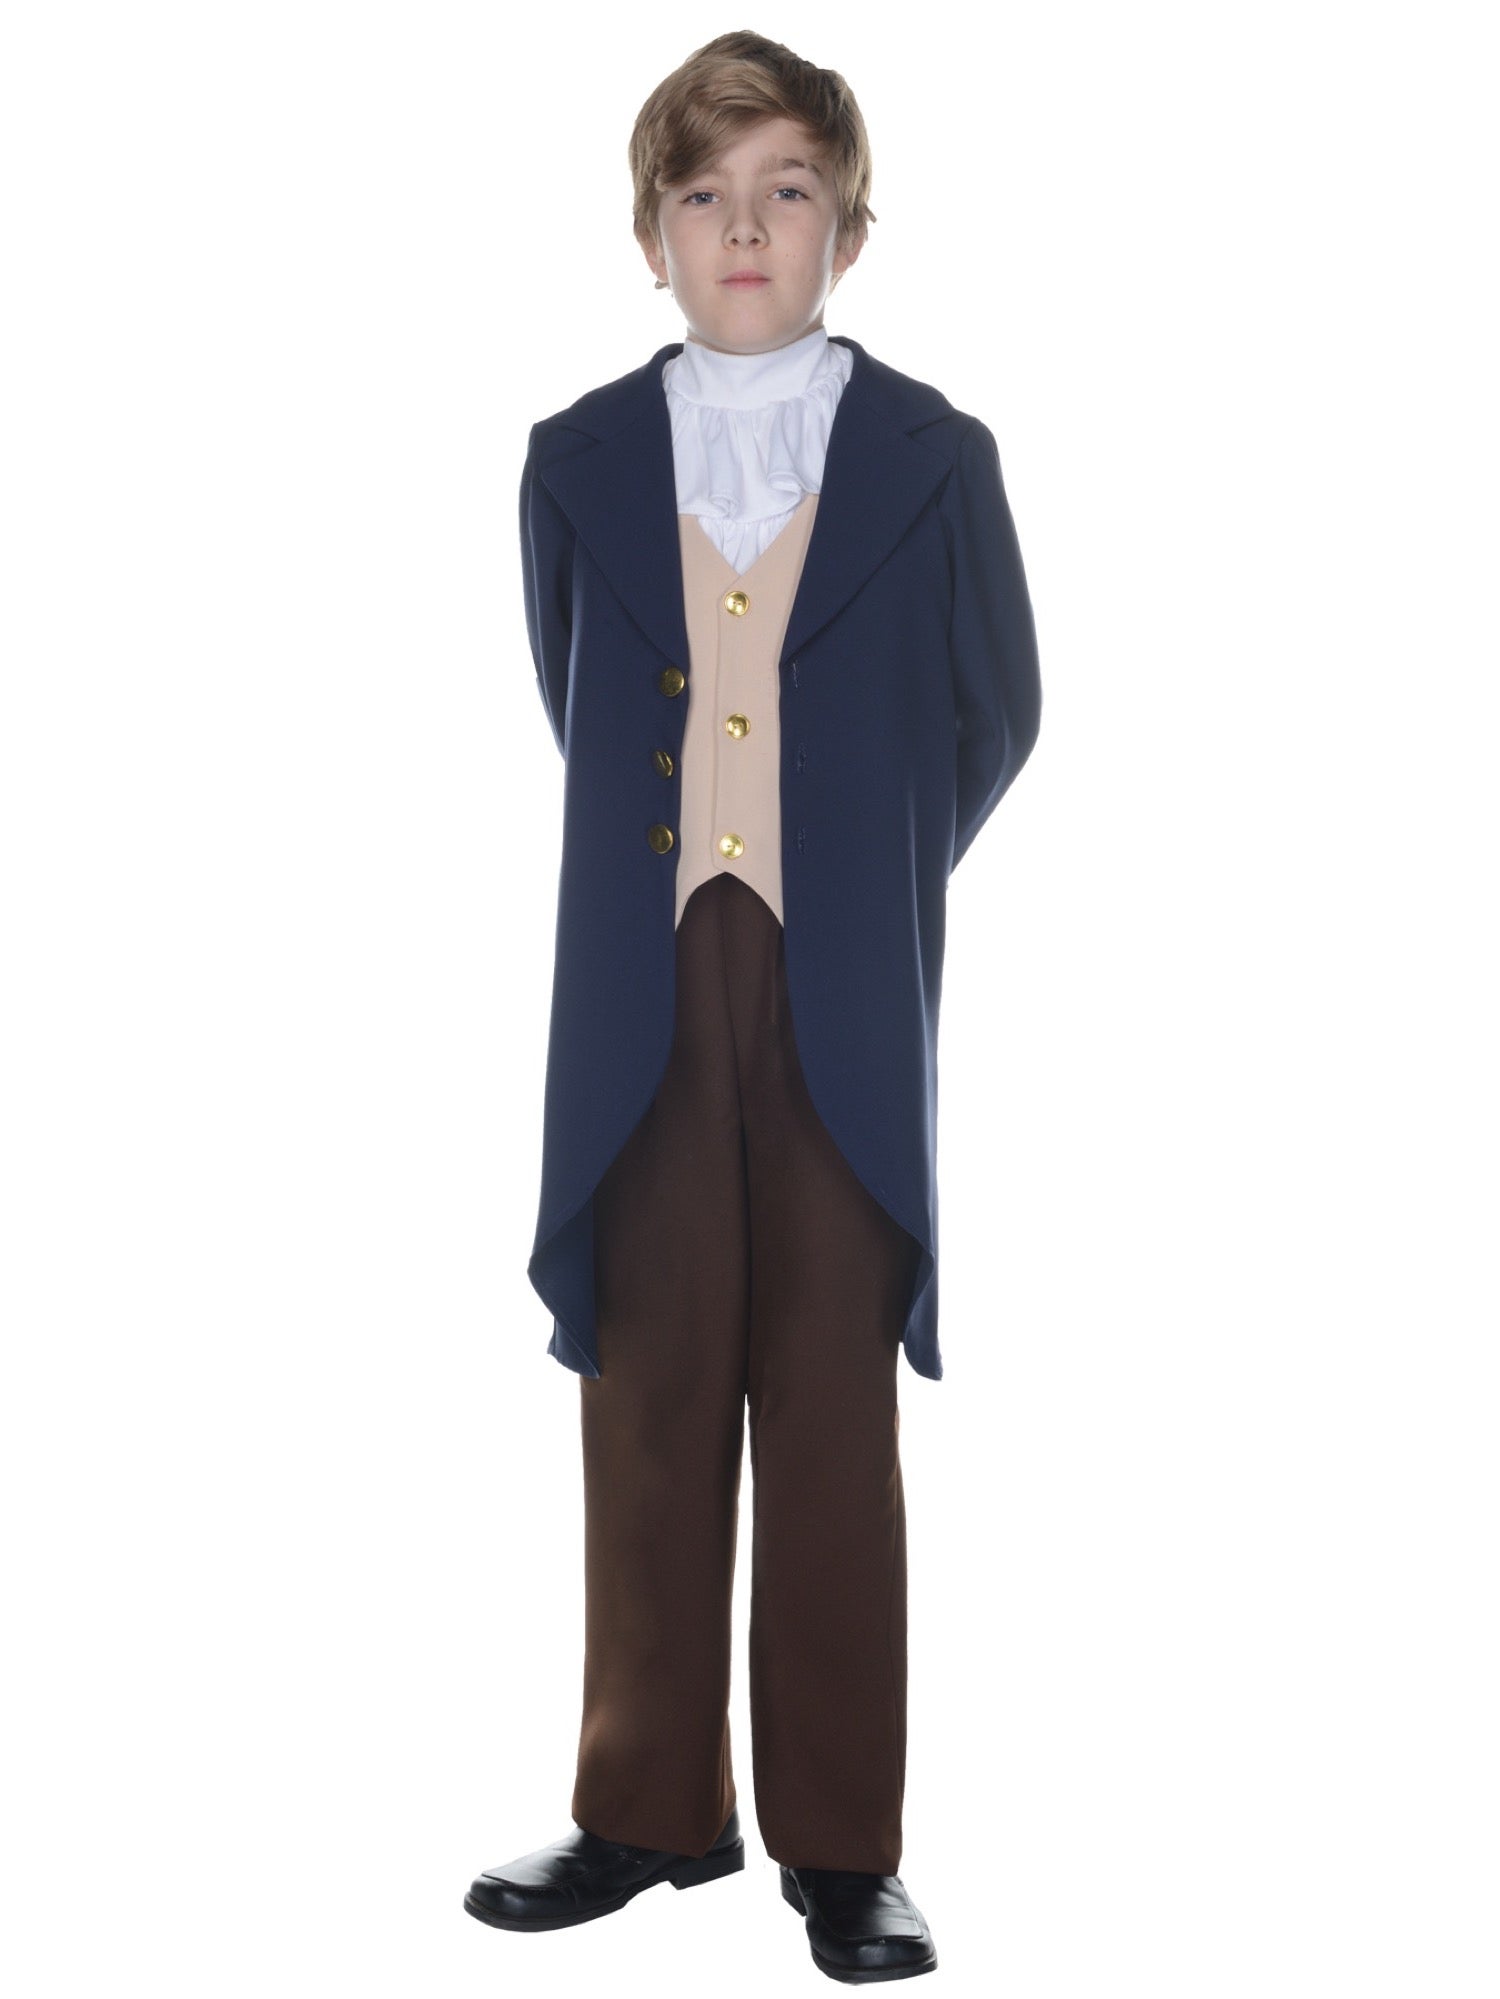 Hobbypos Thomas Jefferson US President Founding Father Colonial Victorian Boys Costume